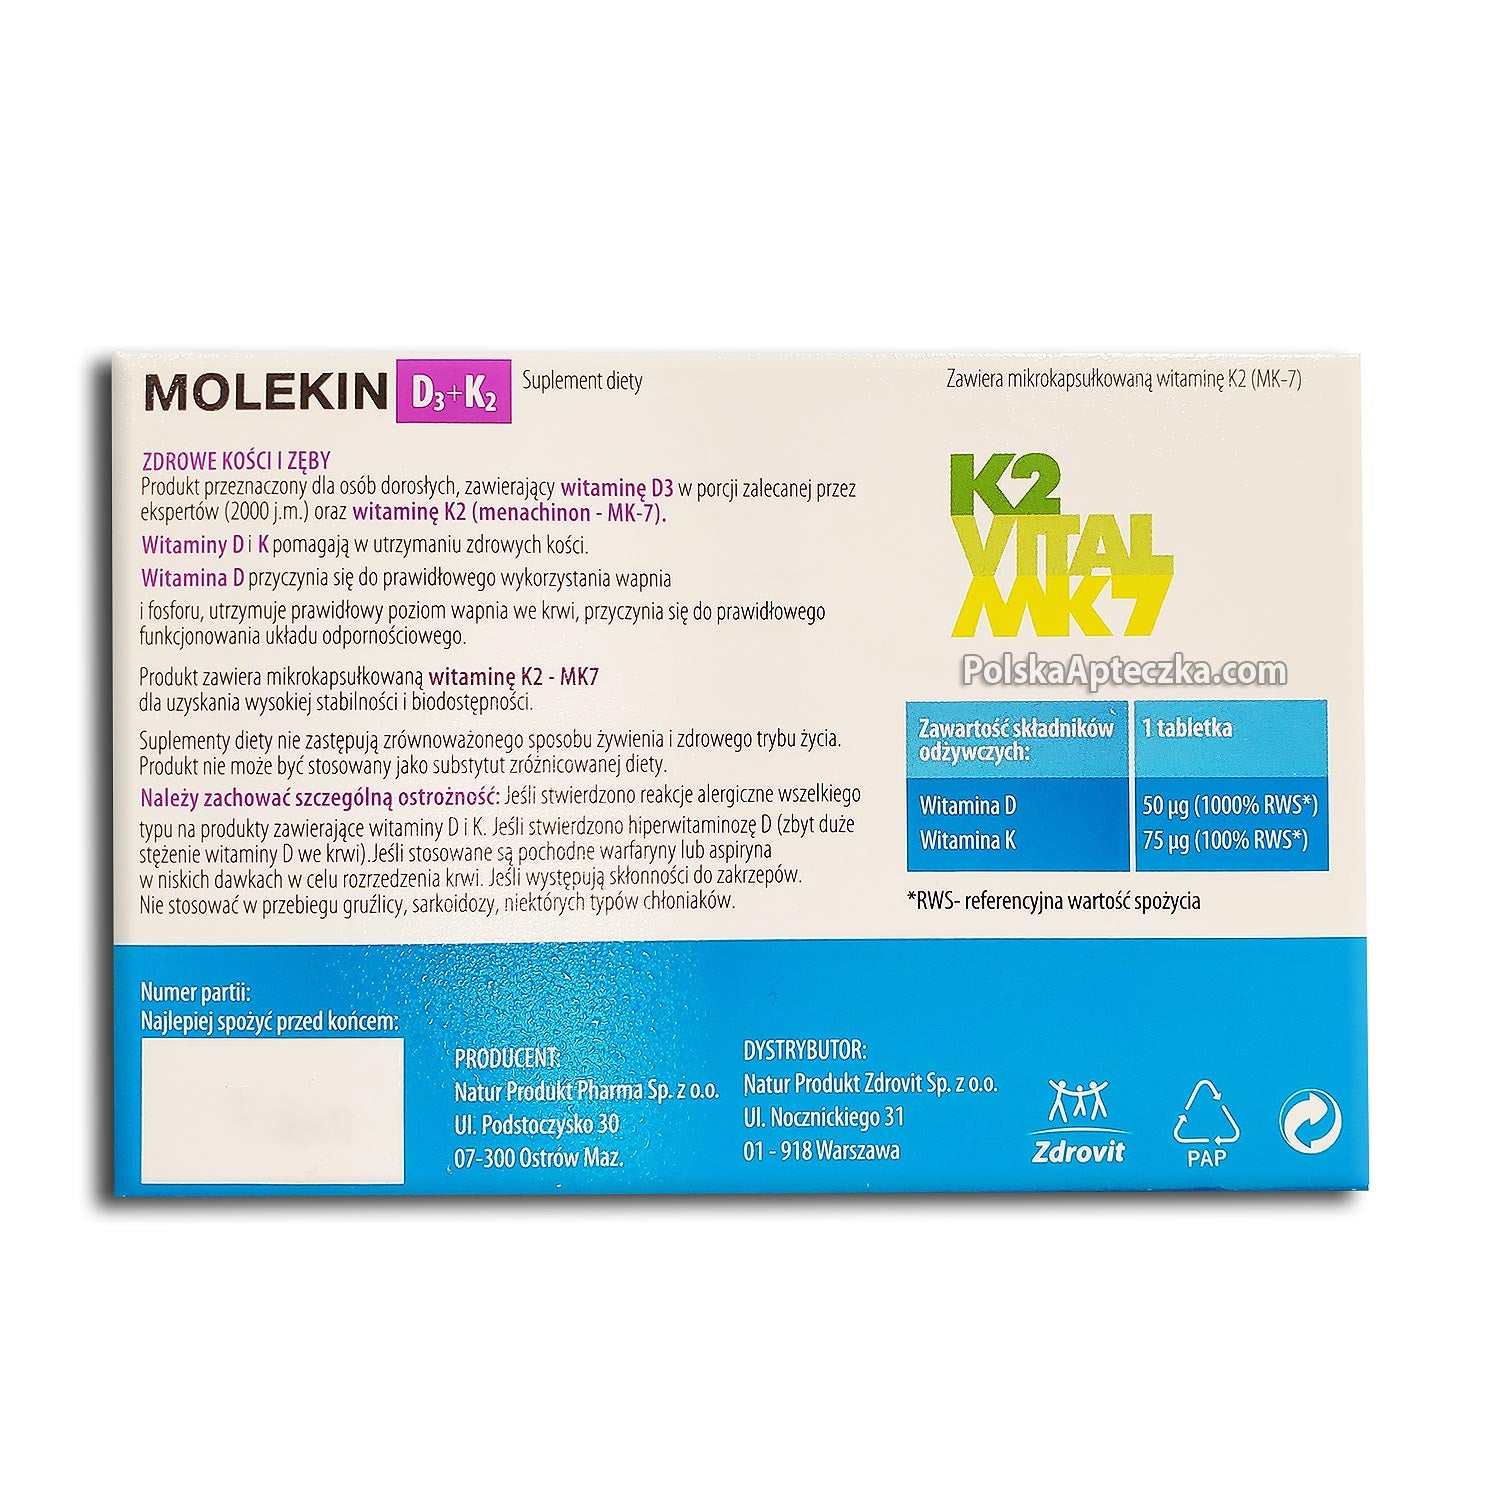 molekin d3 k2 tablets usa